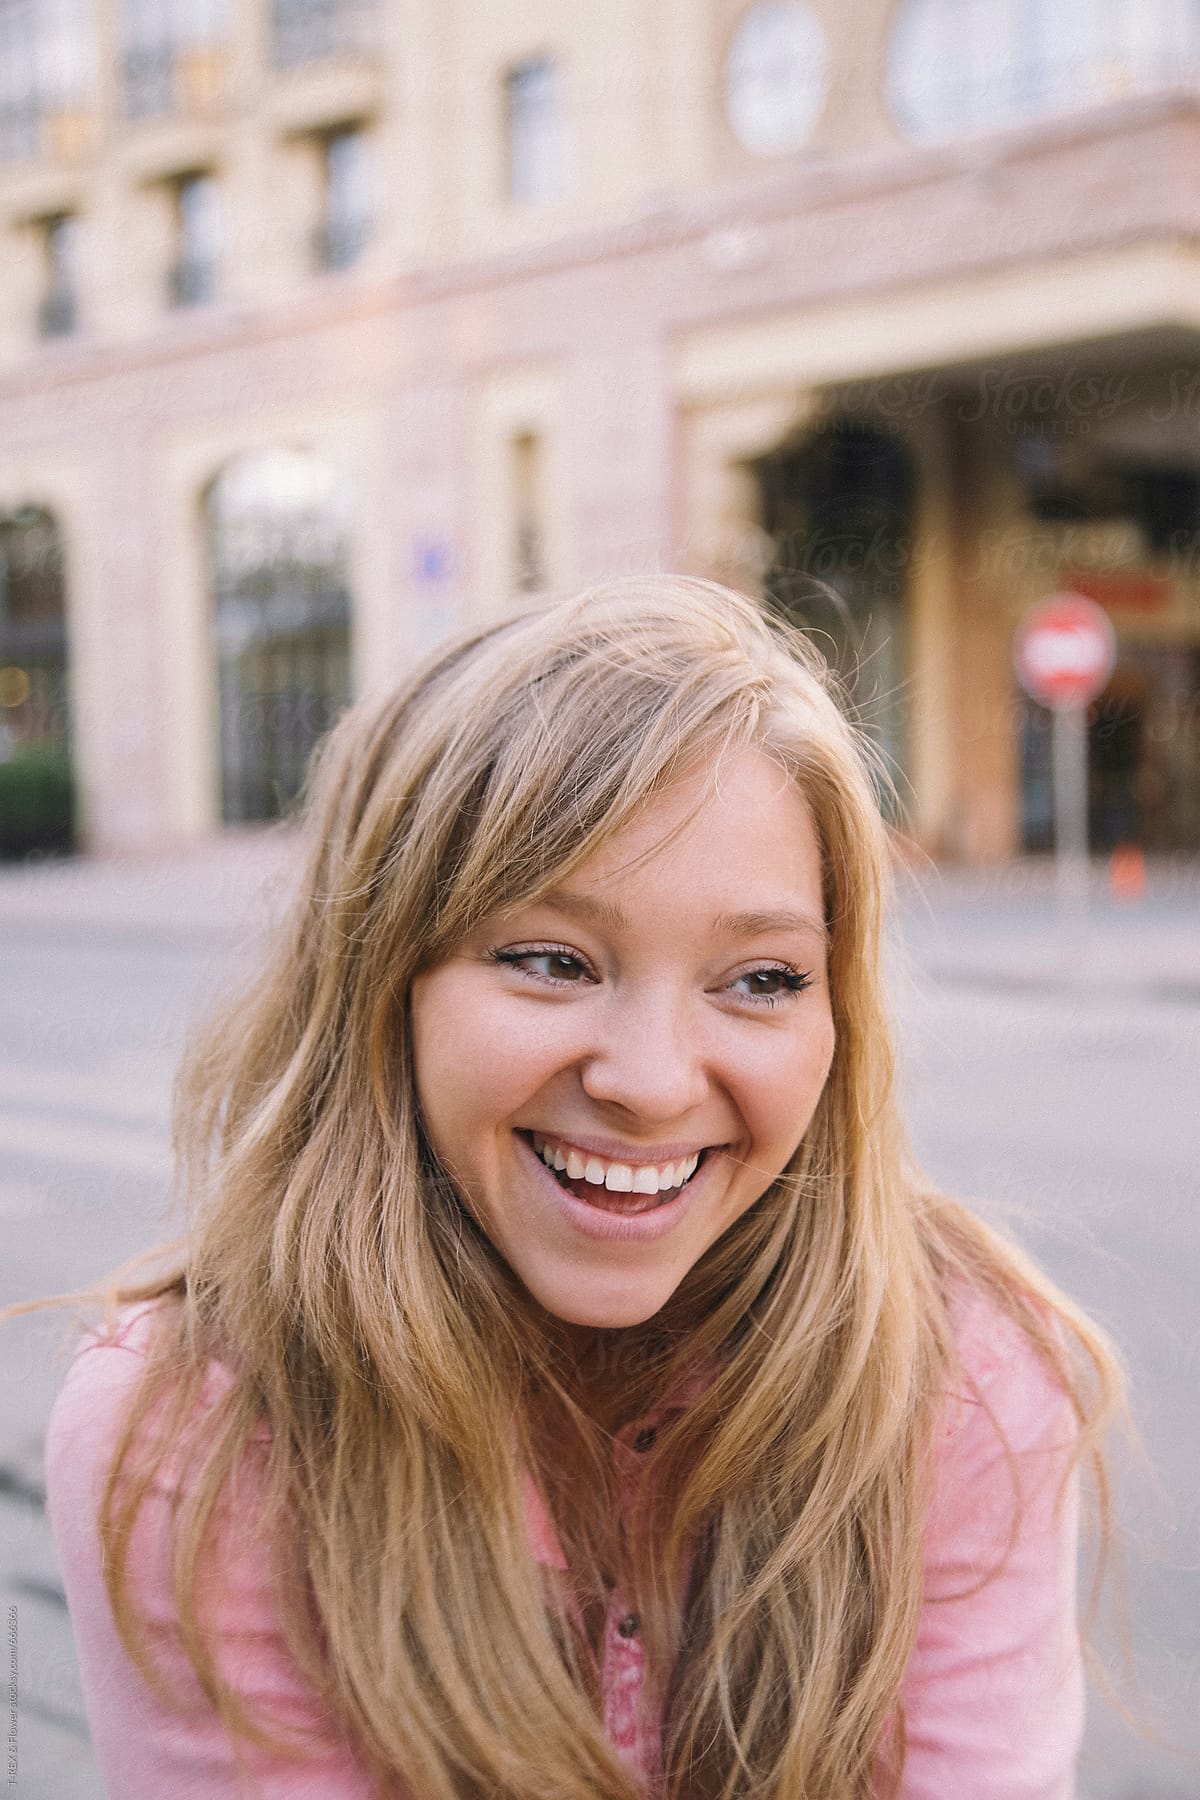 Portrait Of A Smiling Girl By Stocksy Contributor Danil Nevsky Stocksy